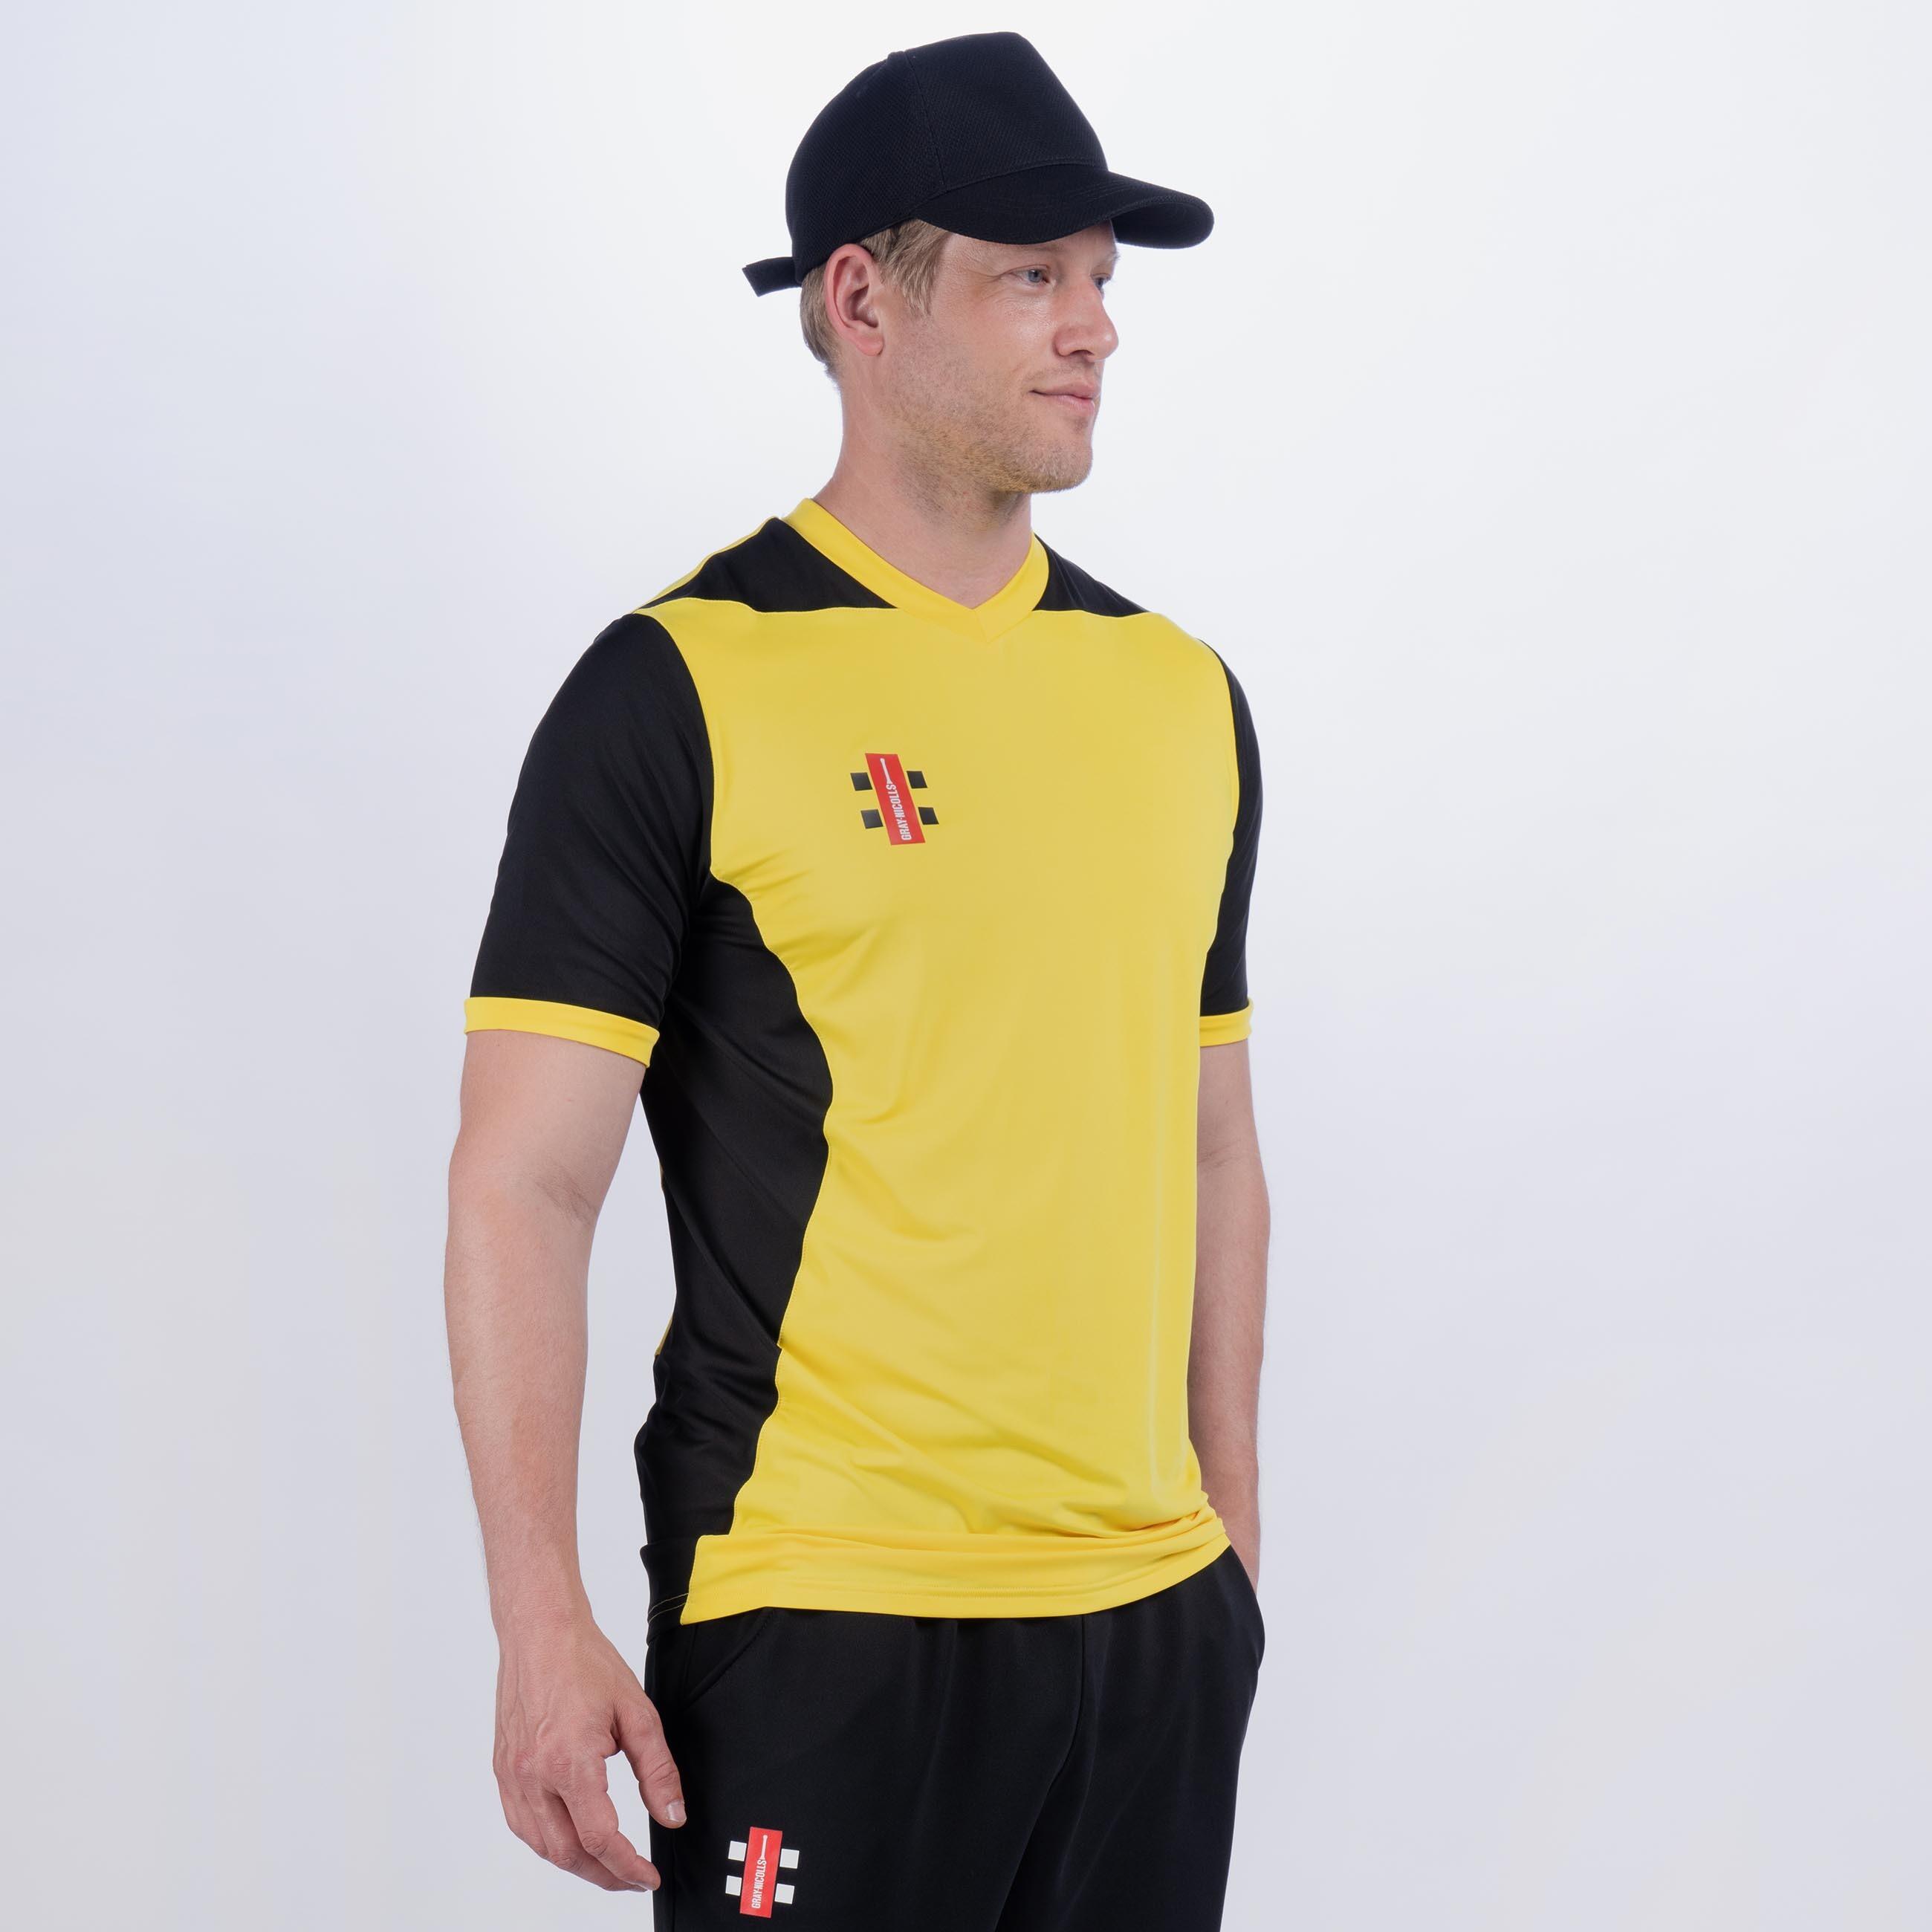 GRAY-NICOLLS Pro Performance T20 Short Sleeve Shirt, Yellow / Black, Adult